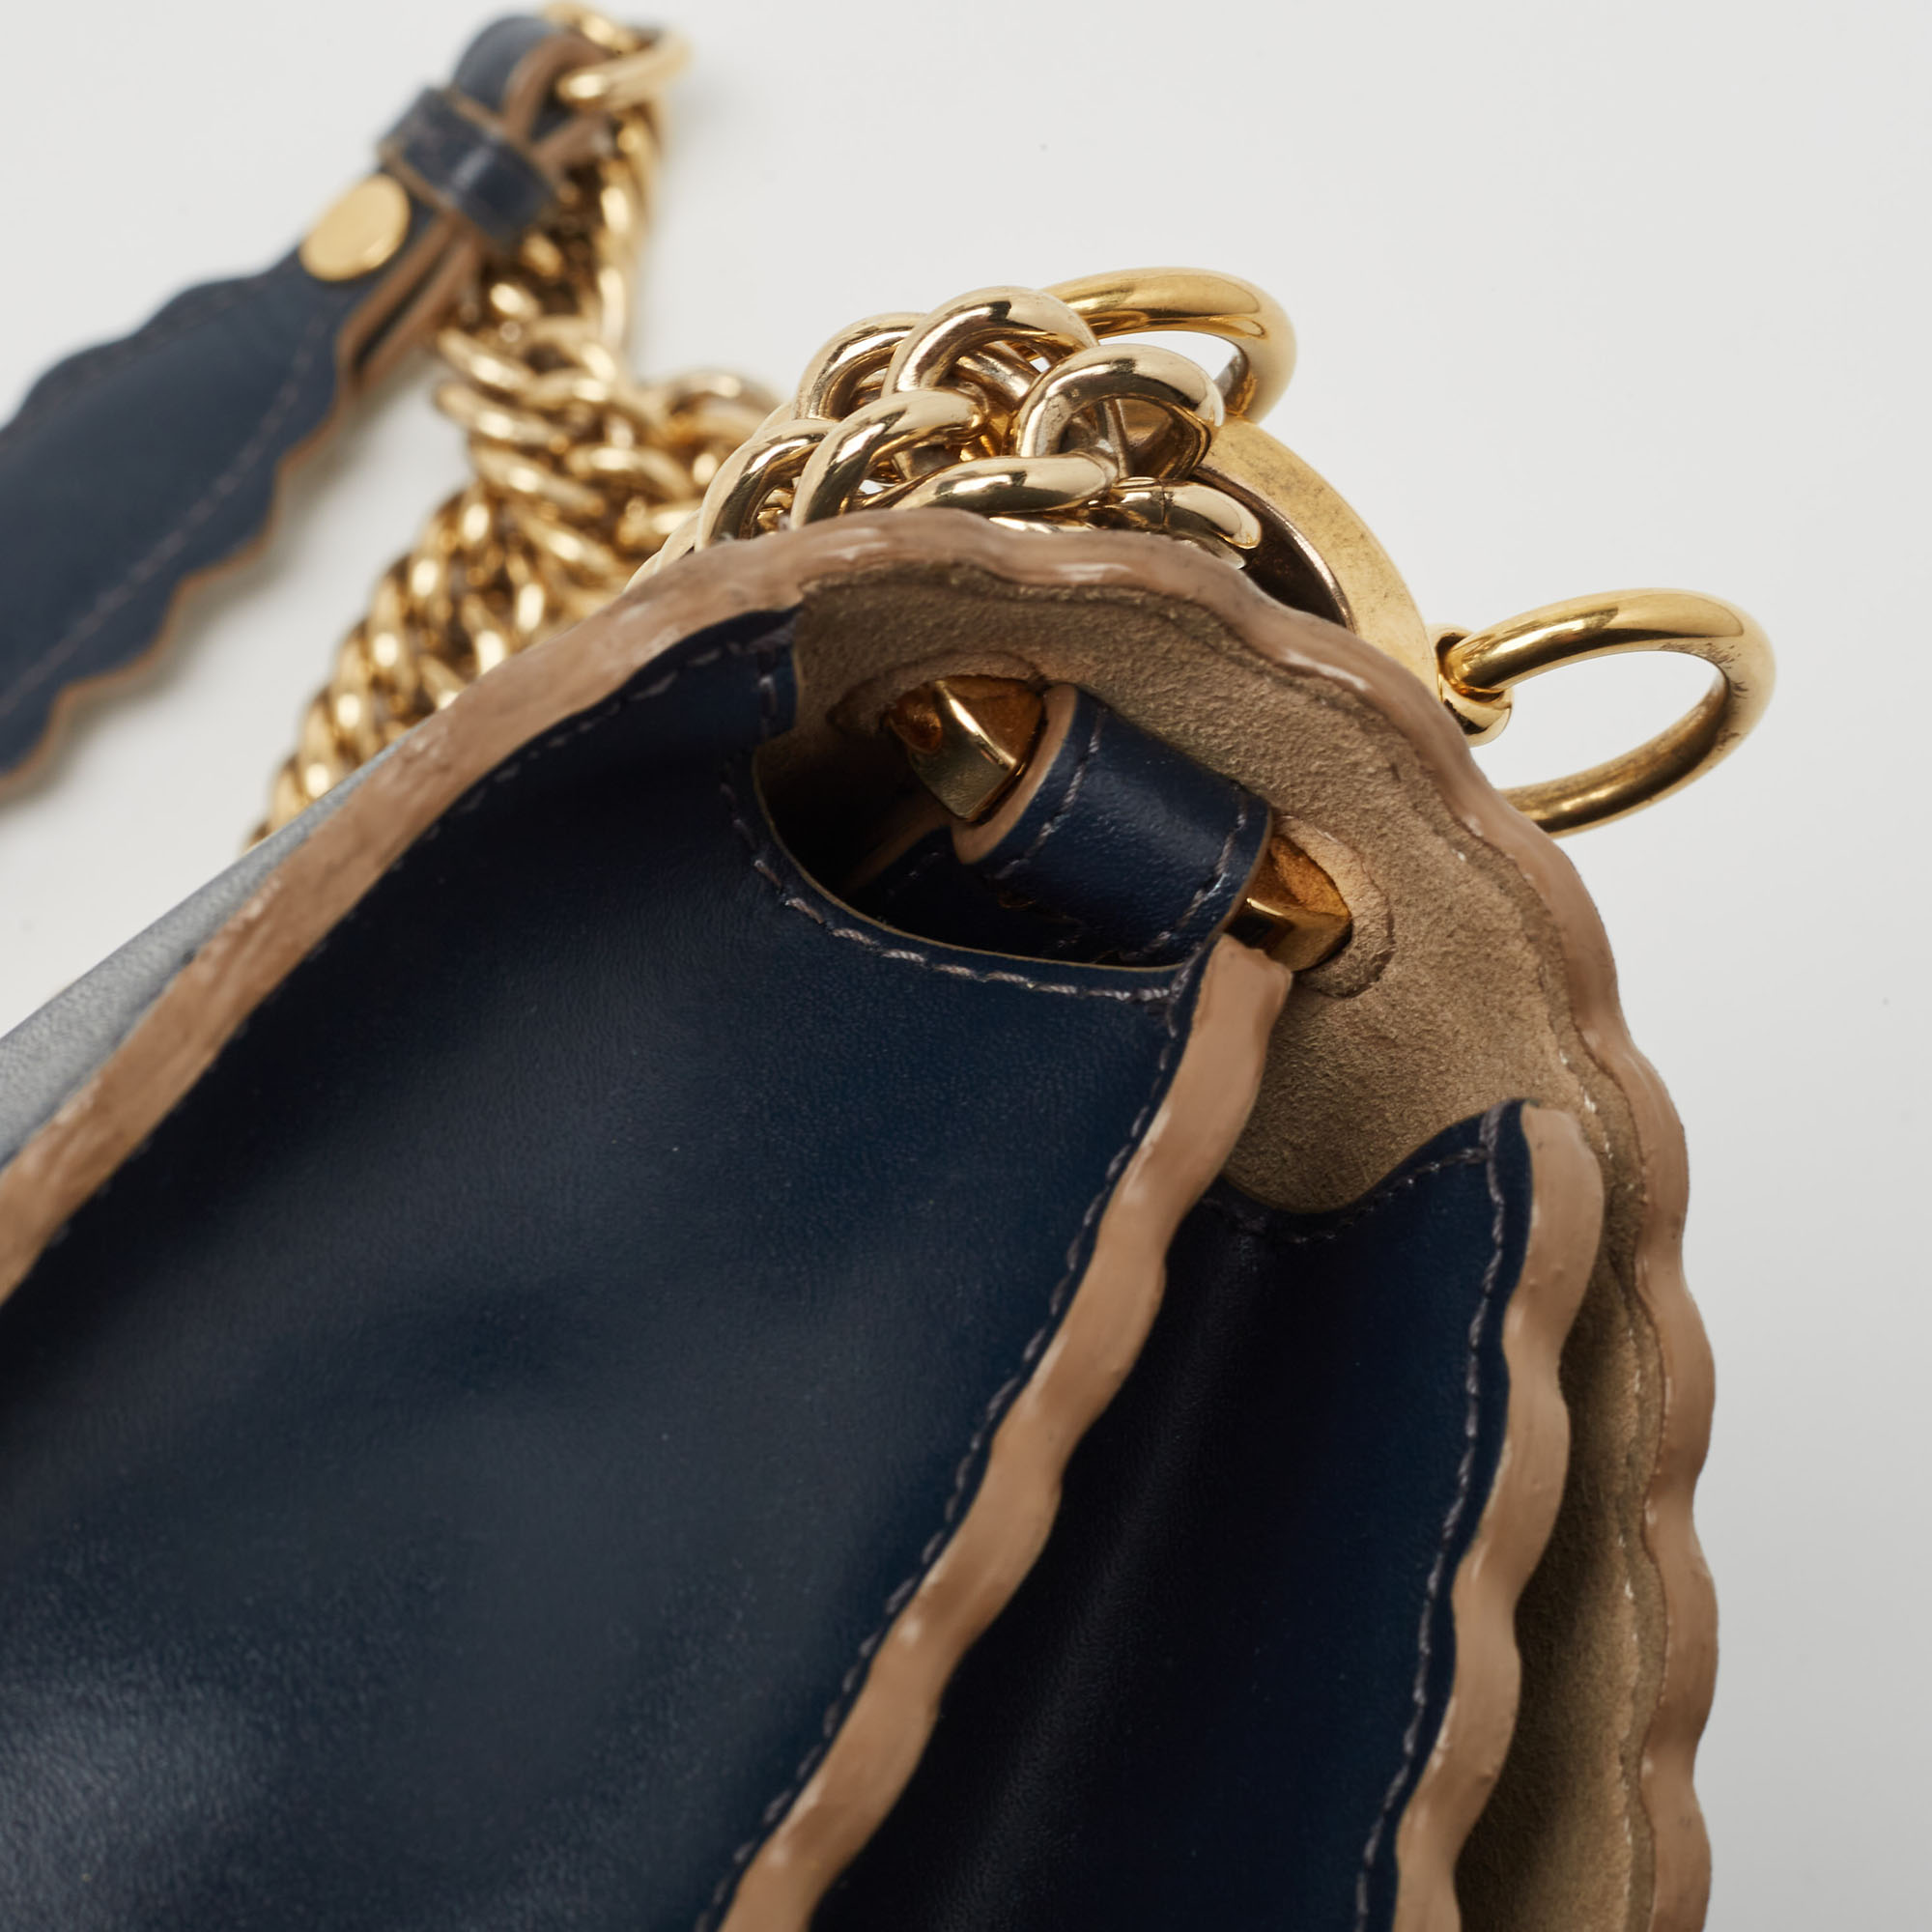 Fendi Navy Blue Leather Mini Scalloped Kan I Shoulder Bag